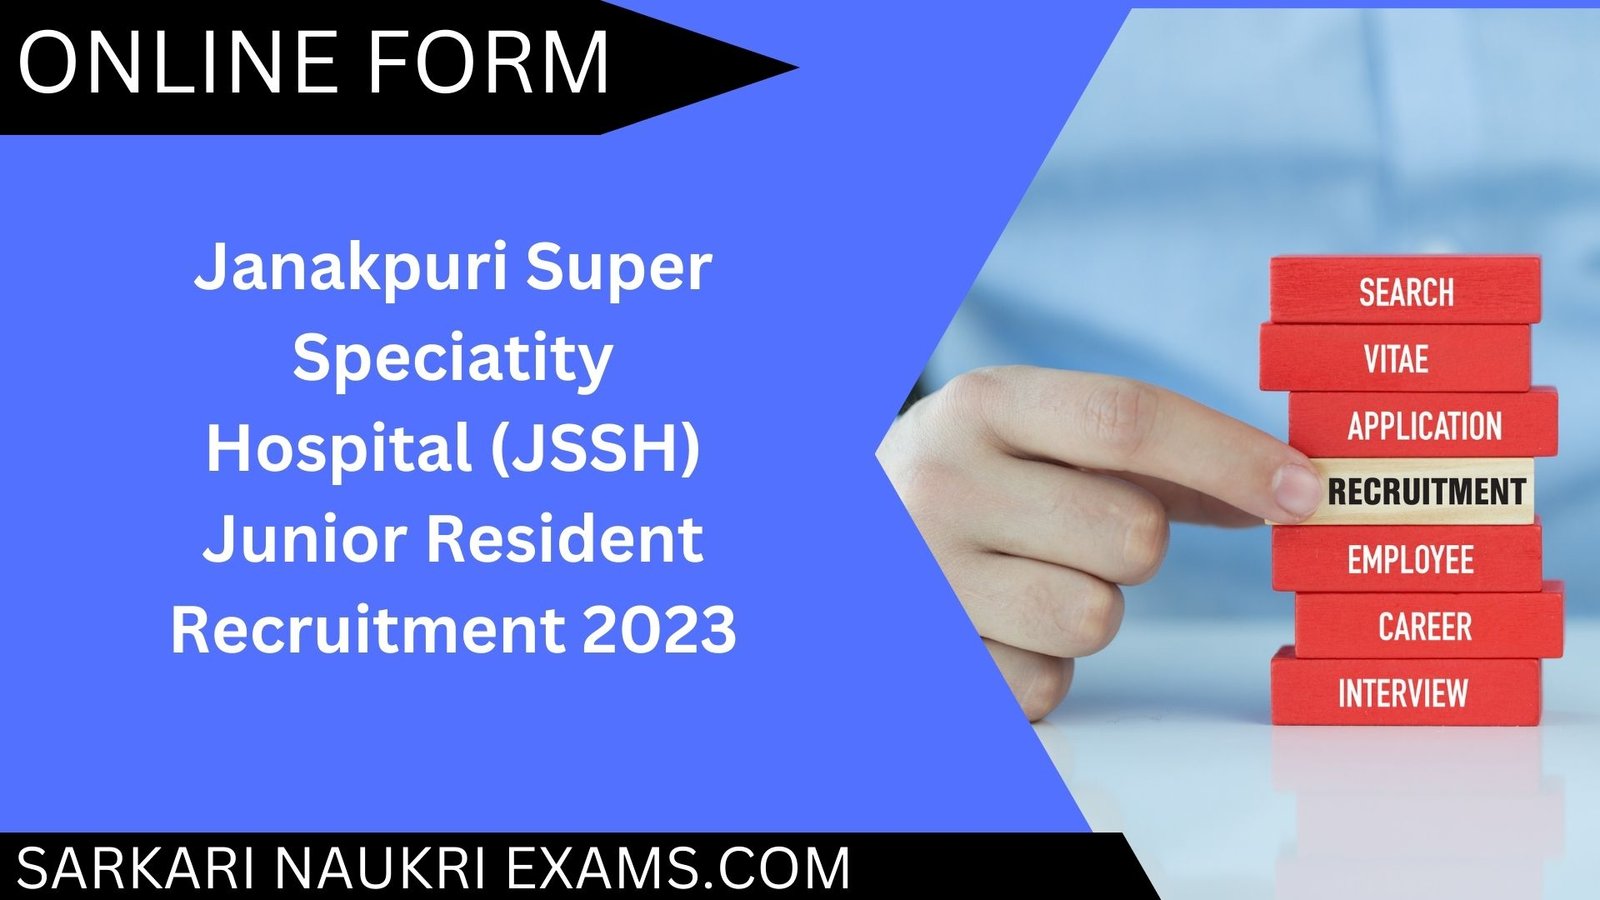 Janakpuri Super Speciatity Hospital (JSSH) Junior Resident Recruitment 2023 | Online Form 